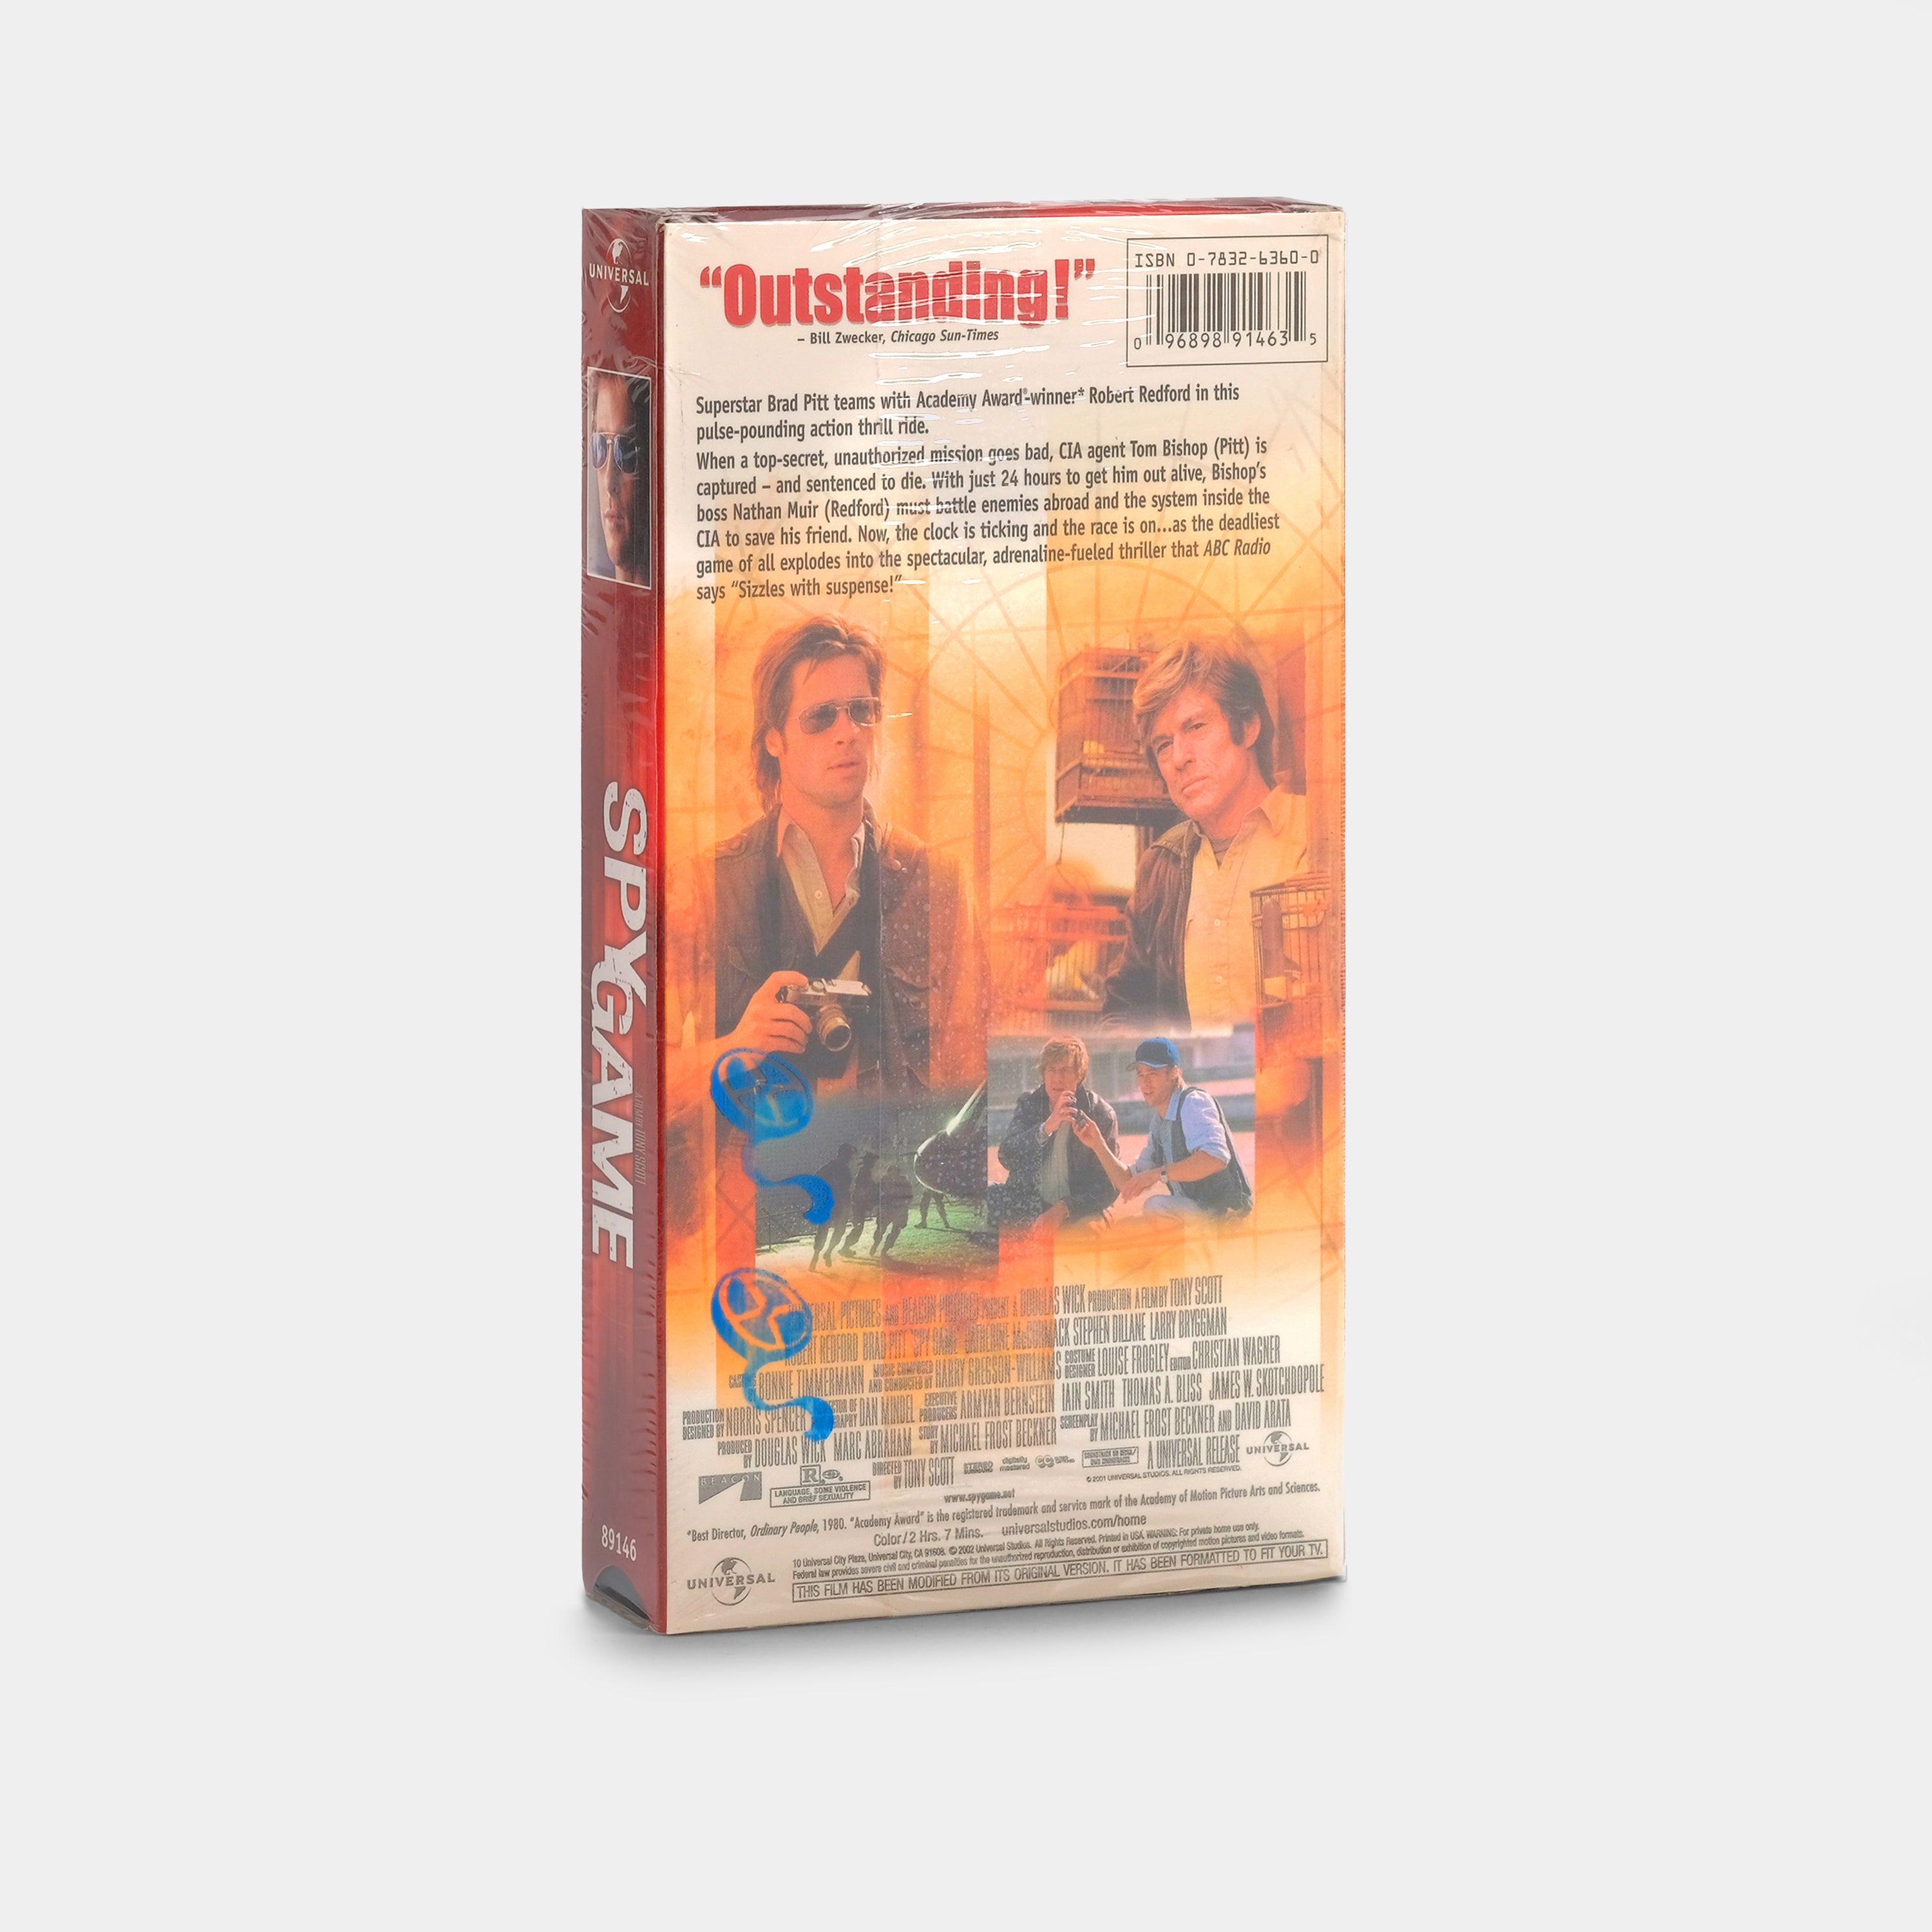 Spy Game (Sealed) VHS Tape